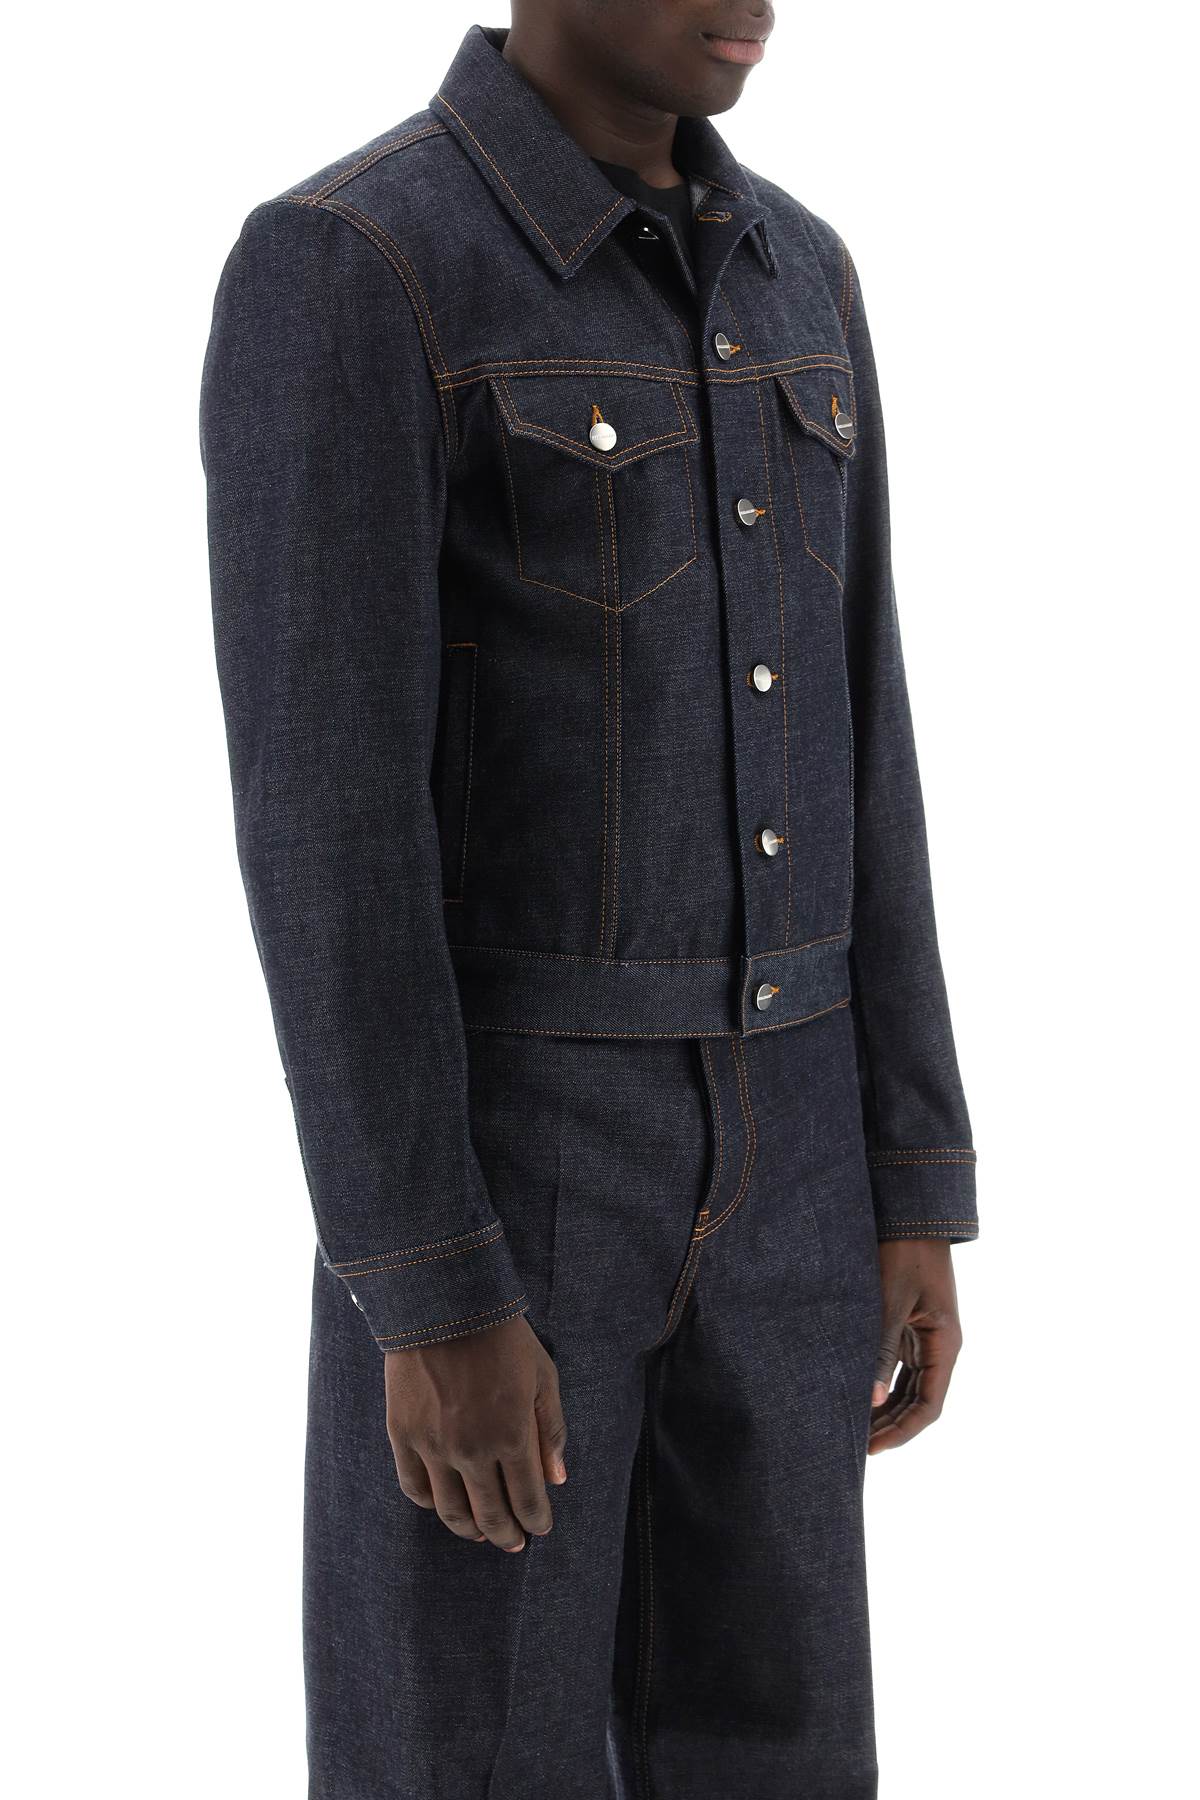 FERRAGAMO Western-Inspired Denim Jacket for Men